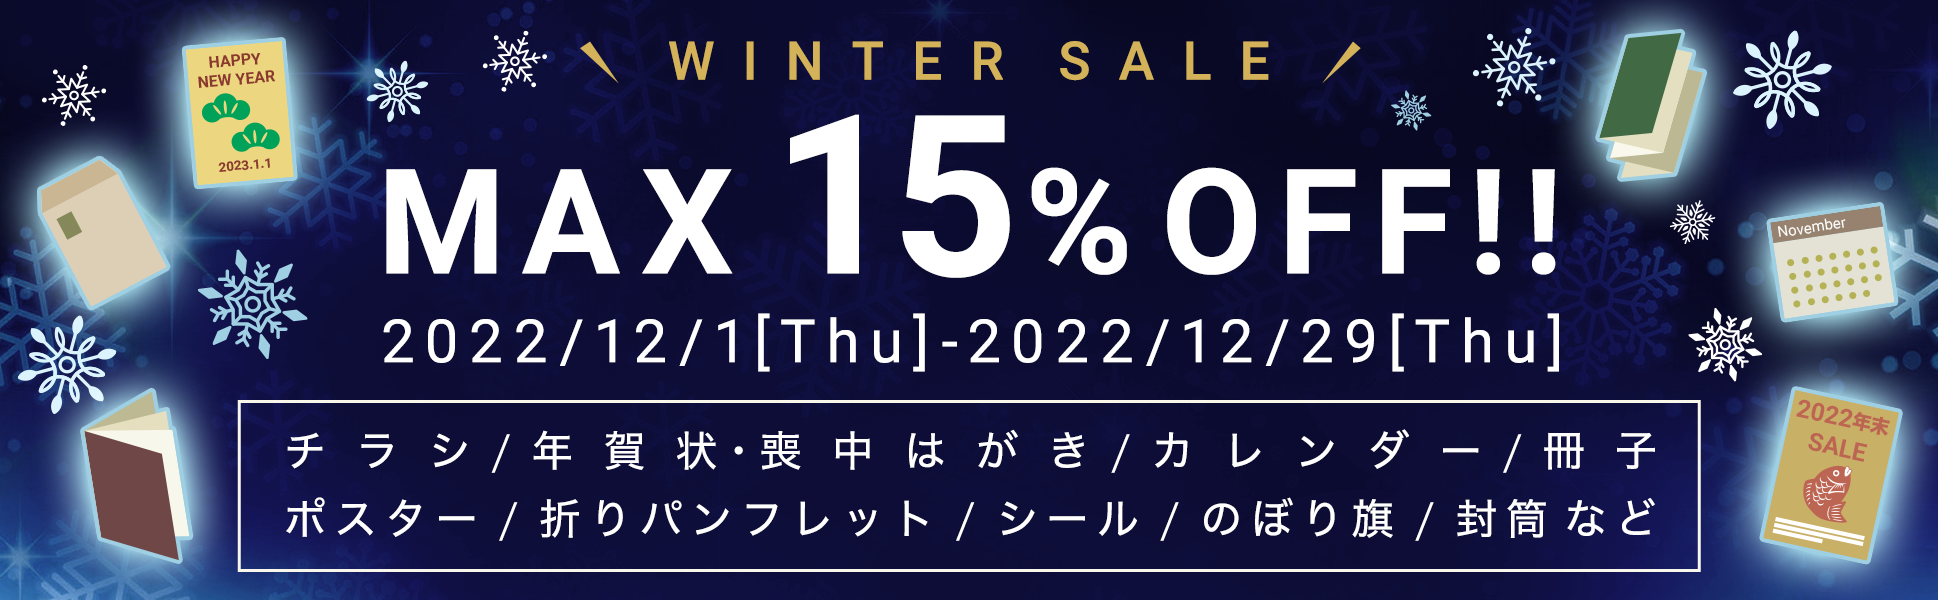 【最大15%OFF!】WINTER SALE